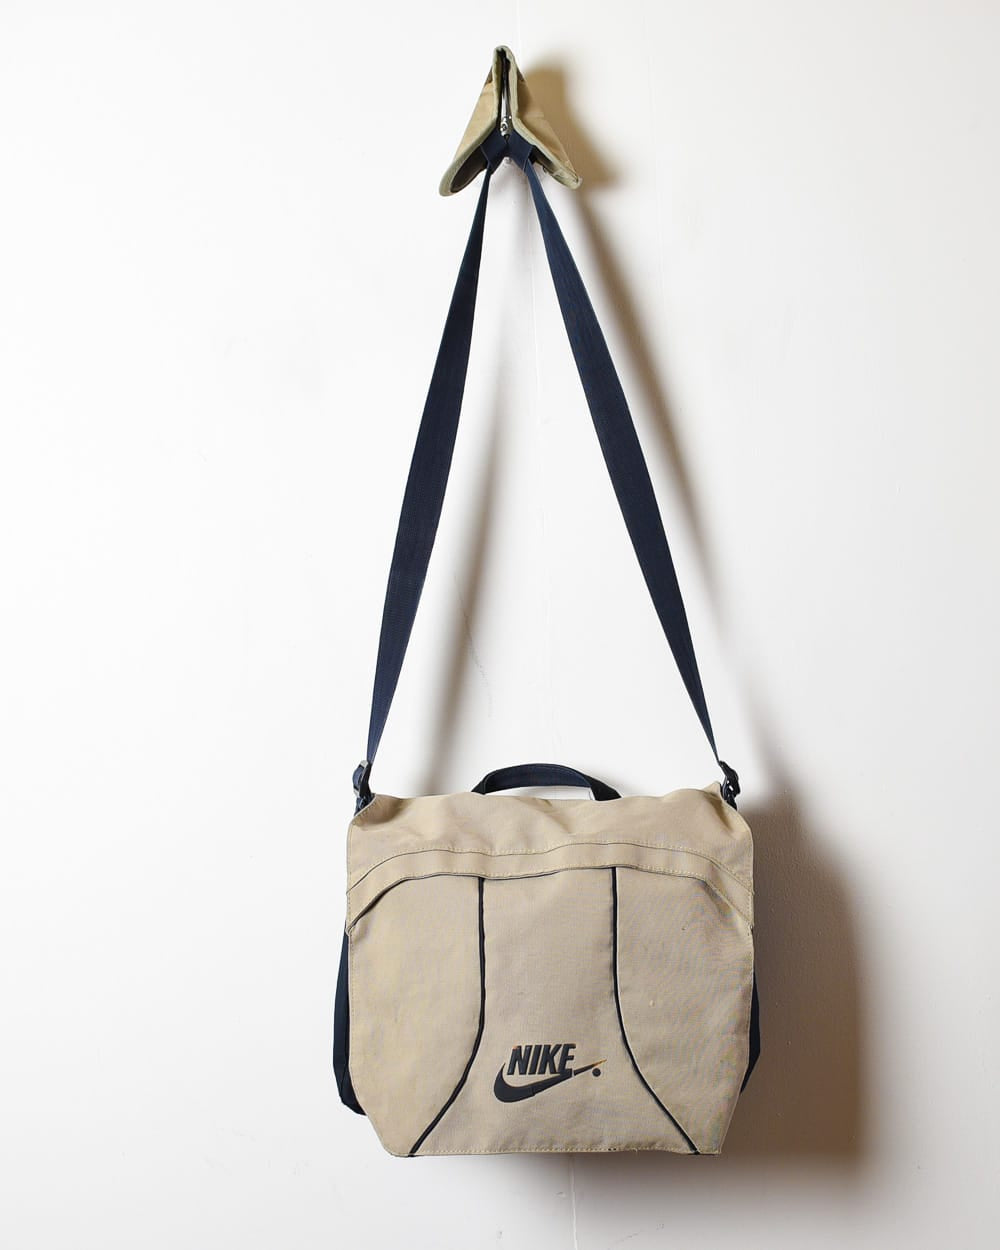  Nike Crossbody Satchel Bag